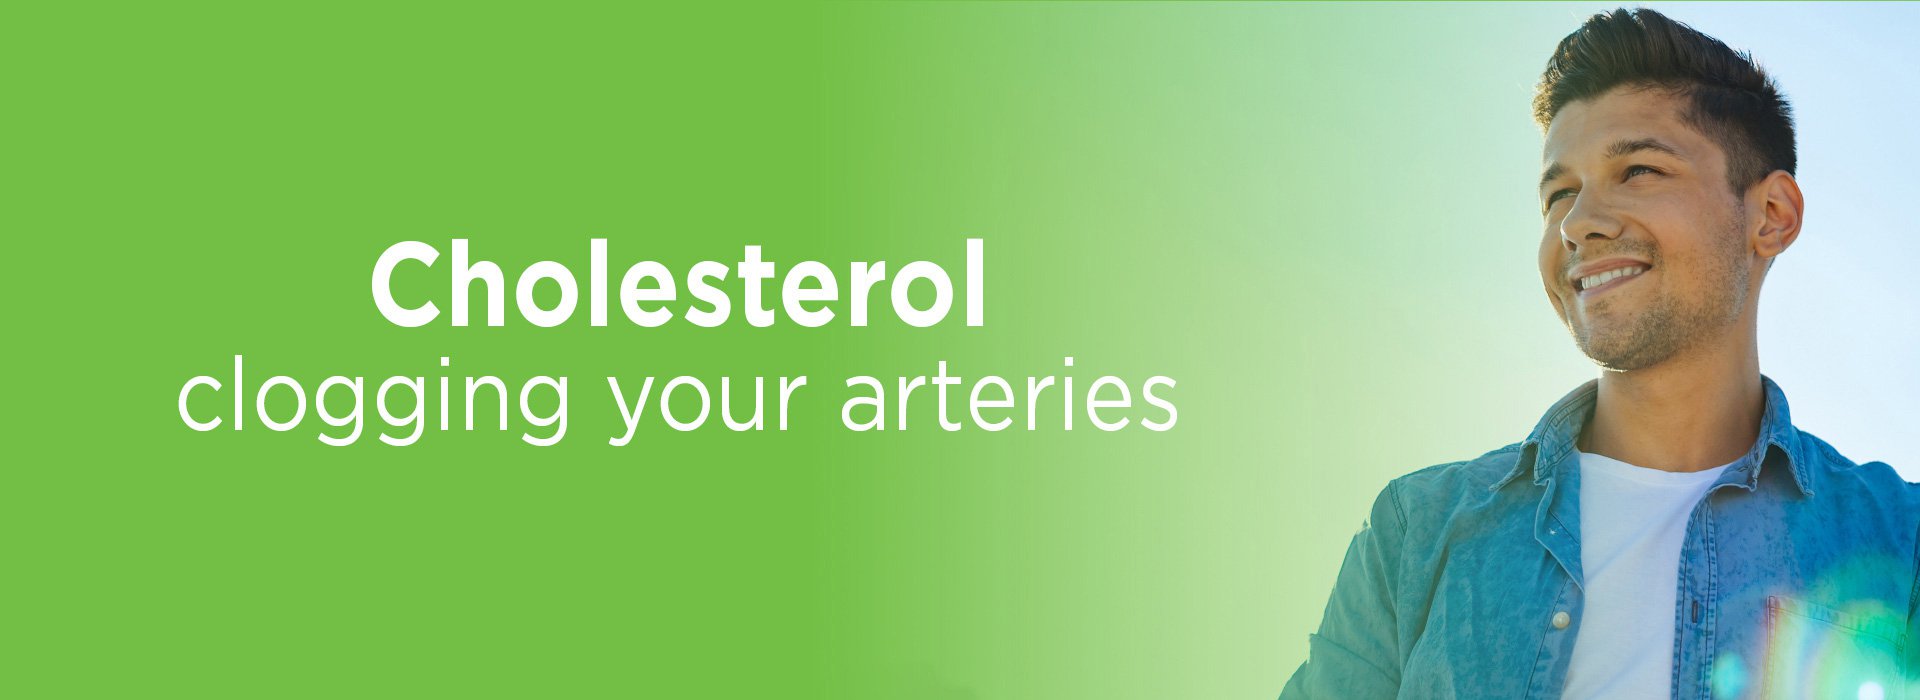 New Image International: Cholesterol - clogging your arteries